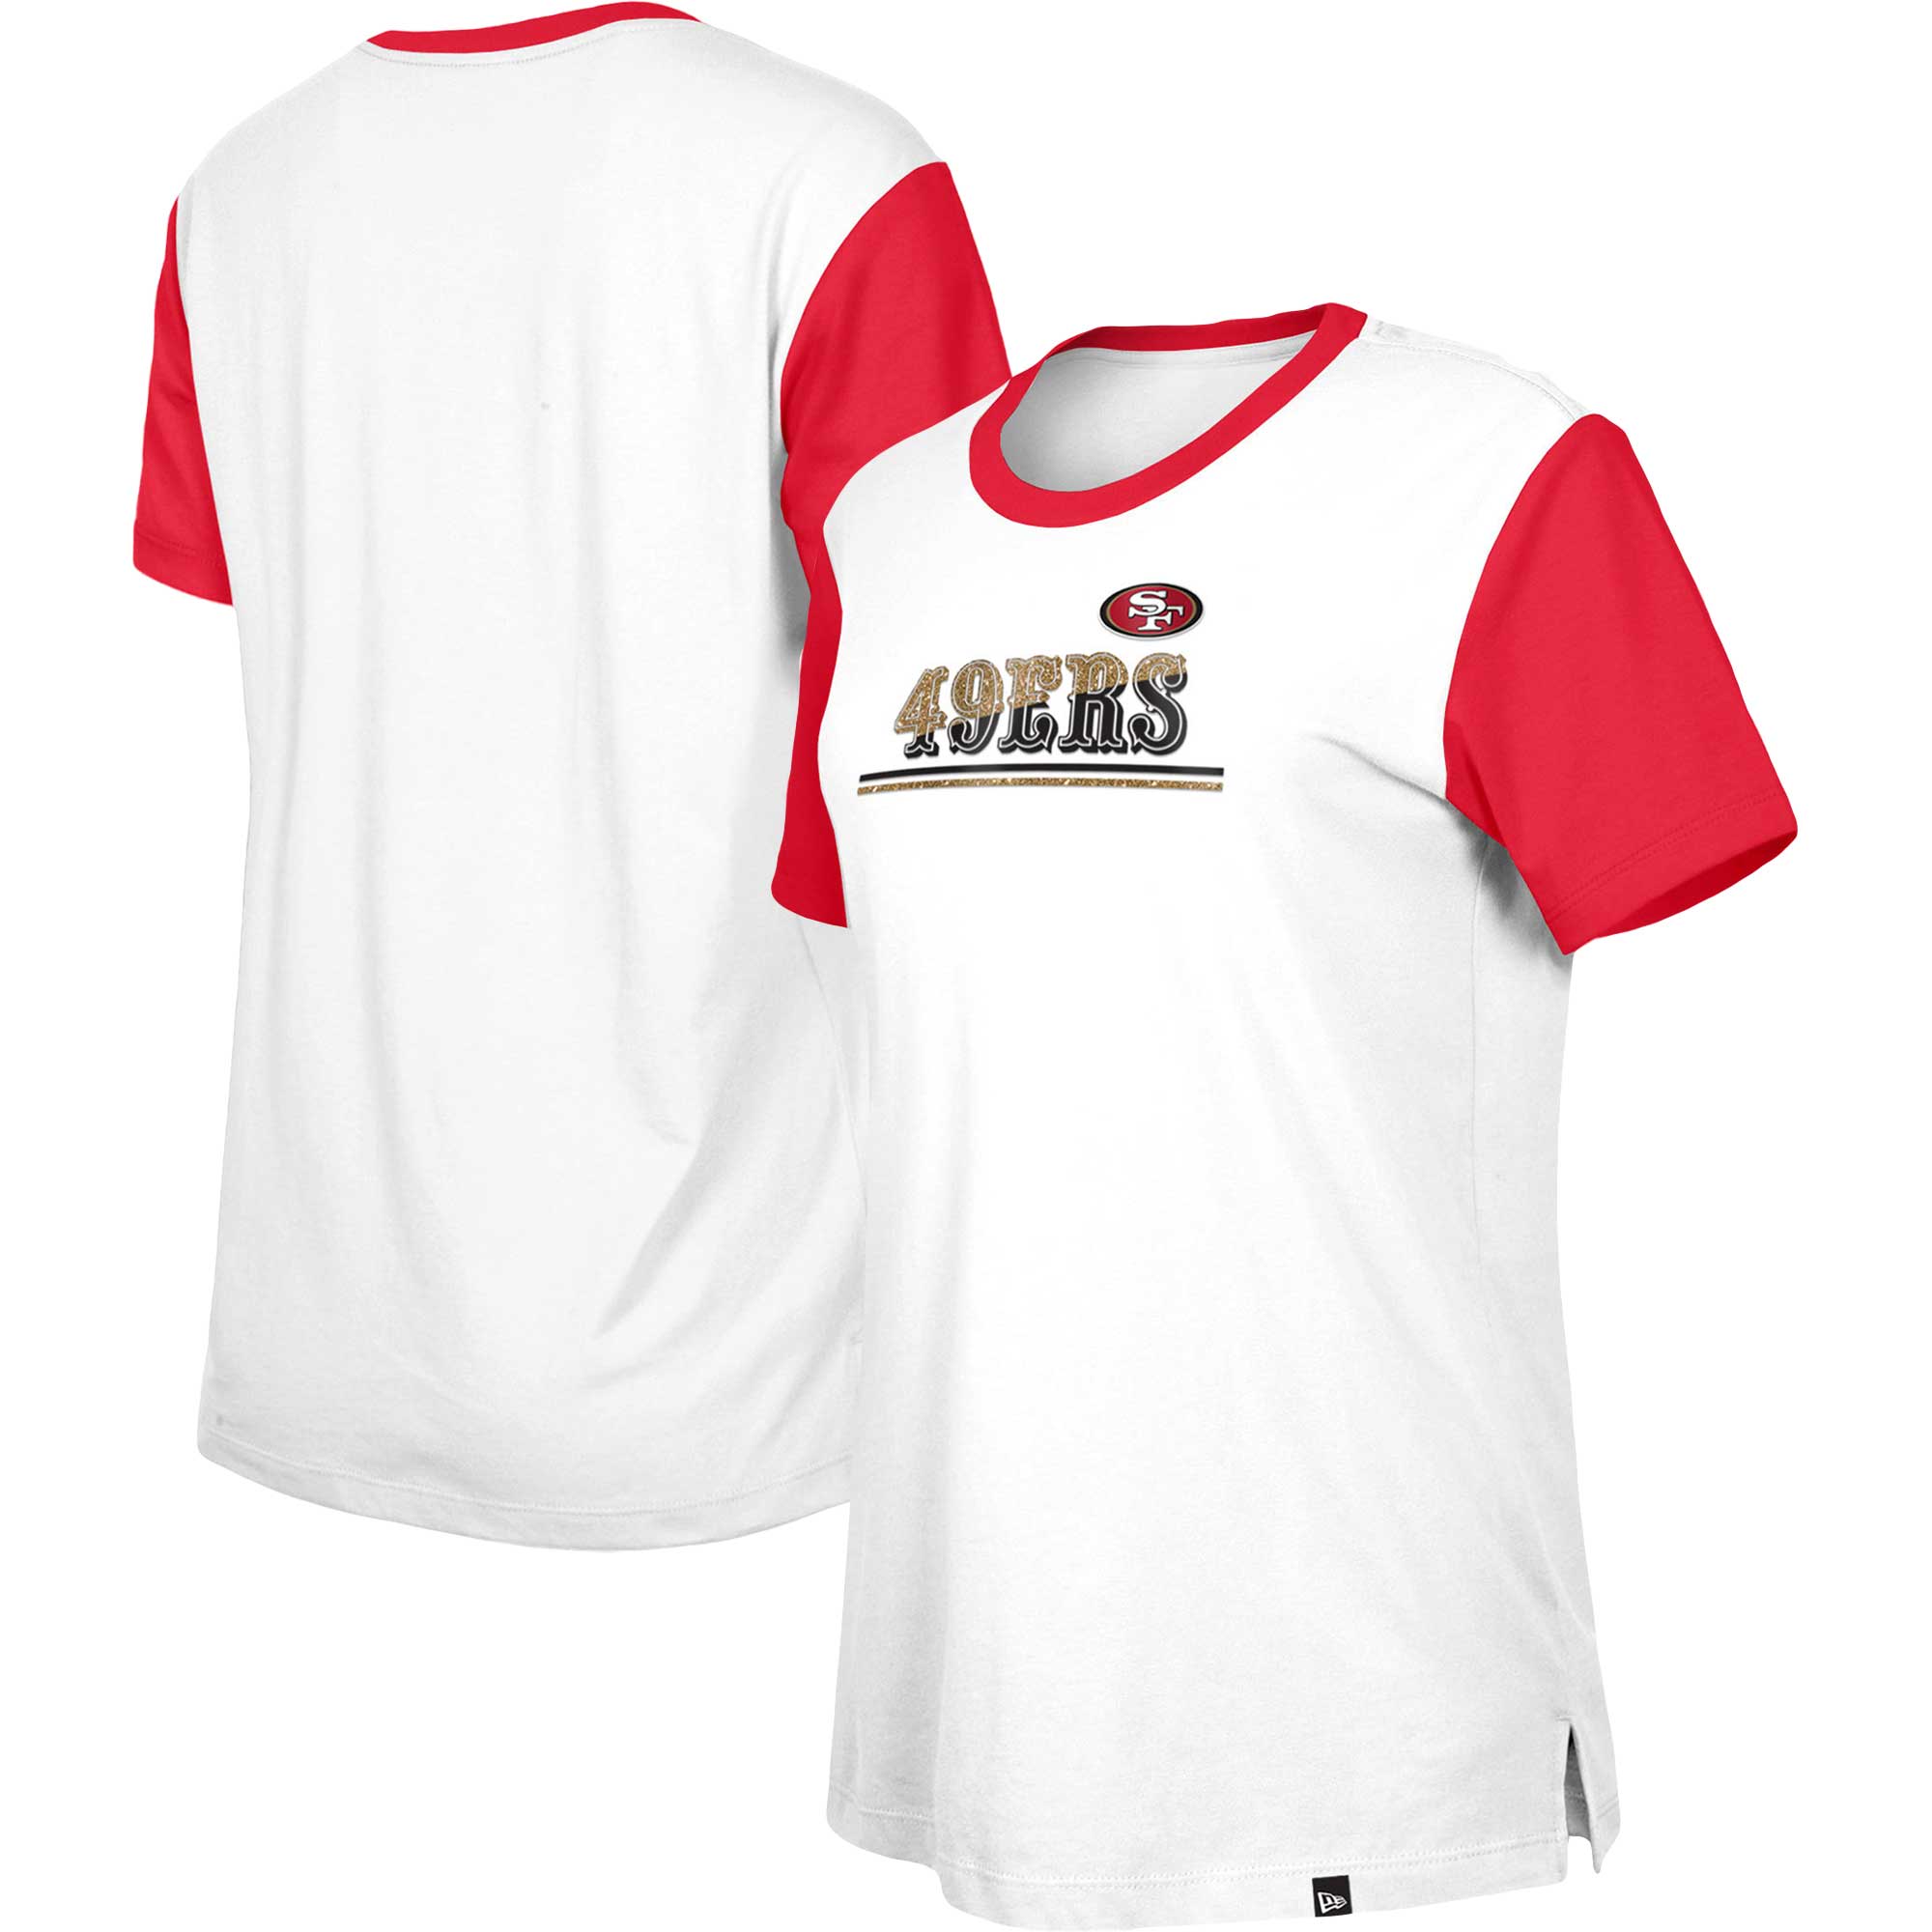 New Era 49ers Third Down Colorblock T-Shirt